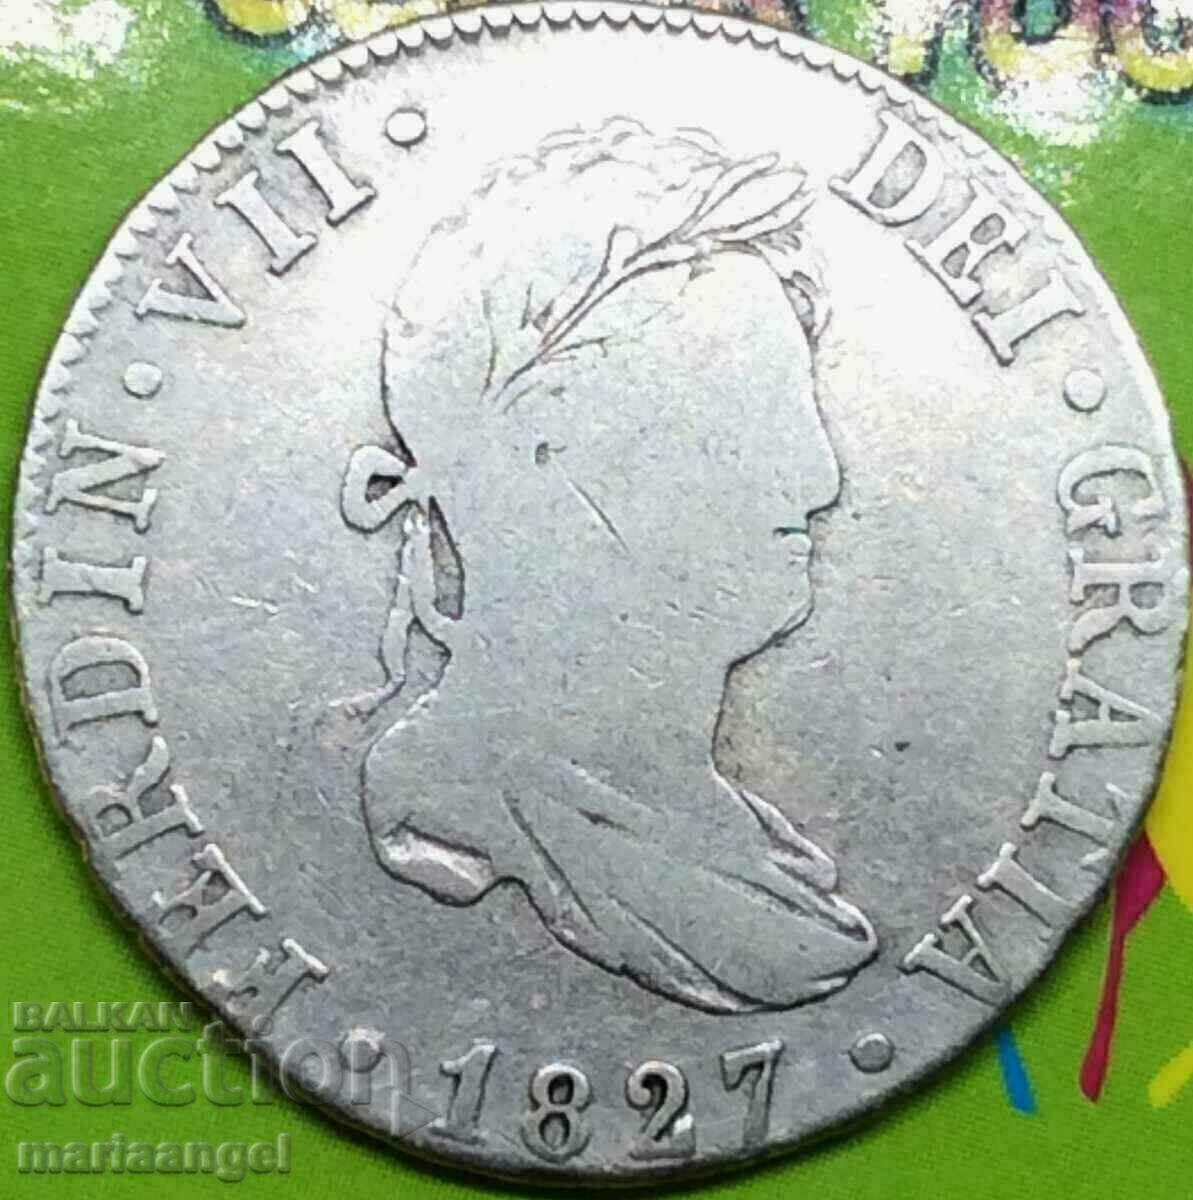 Spain 2 reales 1827 Ferdinand VII 27mm silver - rare